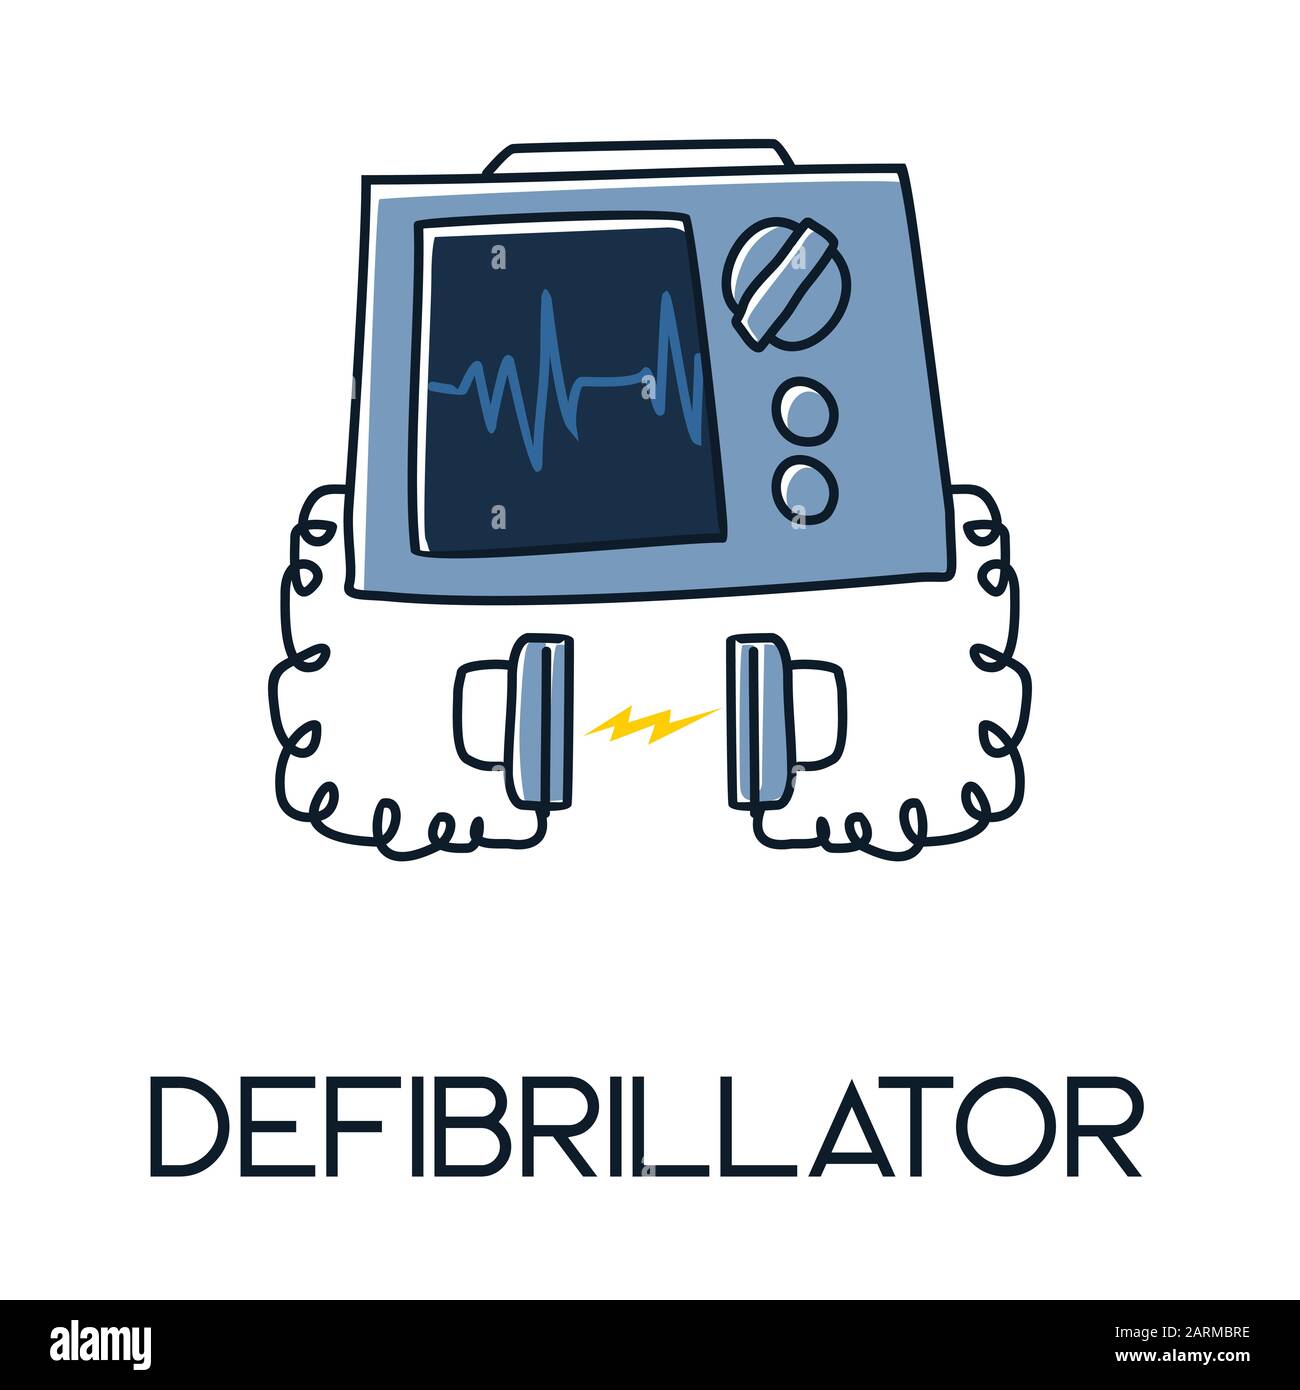 Defibrillator minimalist out line hand drawn medic flat icon illustration Stock Vector